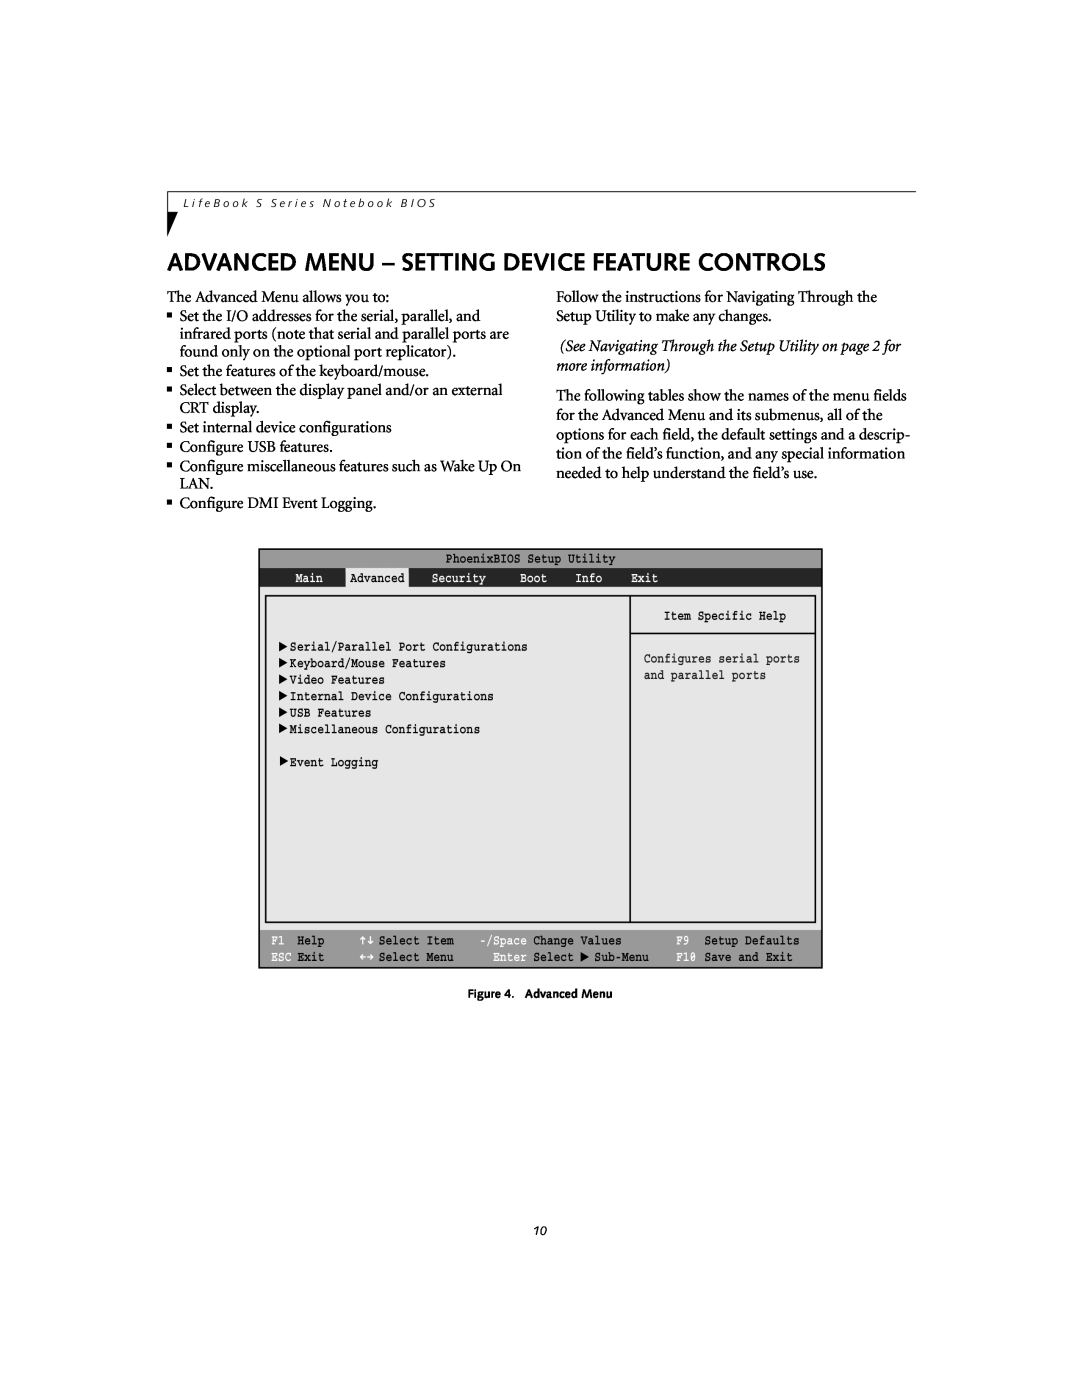 Fujitsu Siemens Computers S2110 manual Advanced Menu - Setting Device Feature Controls 